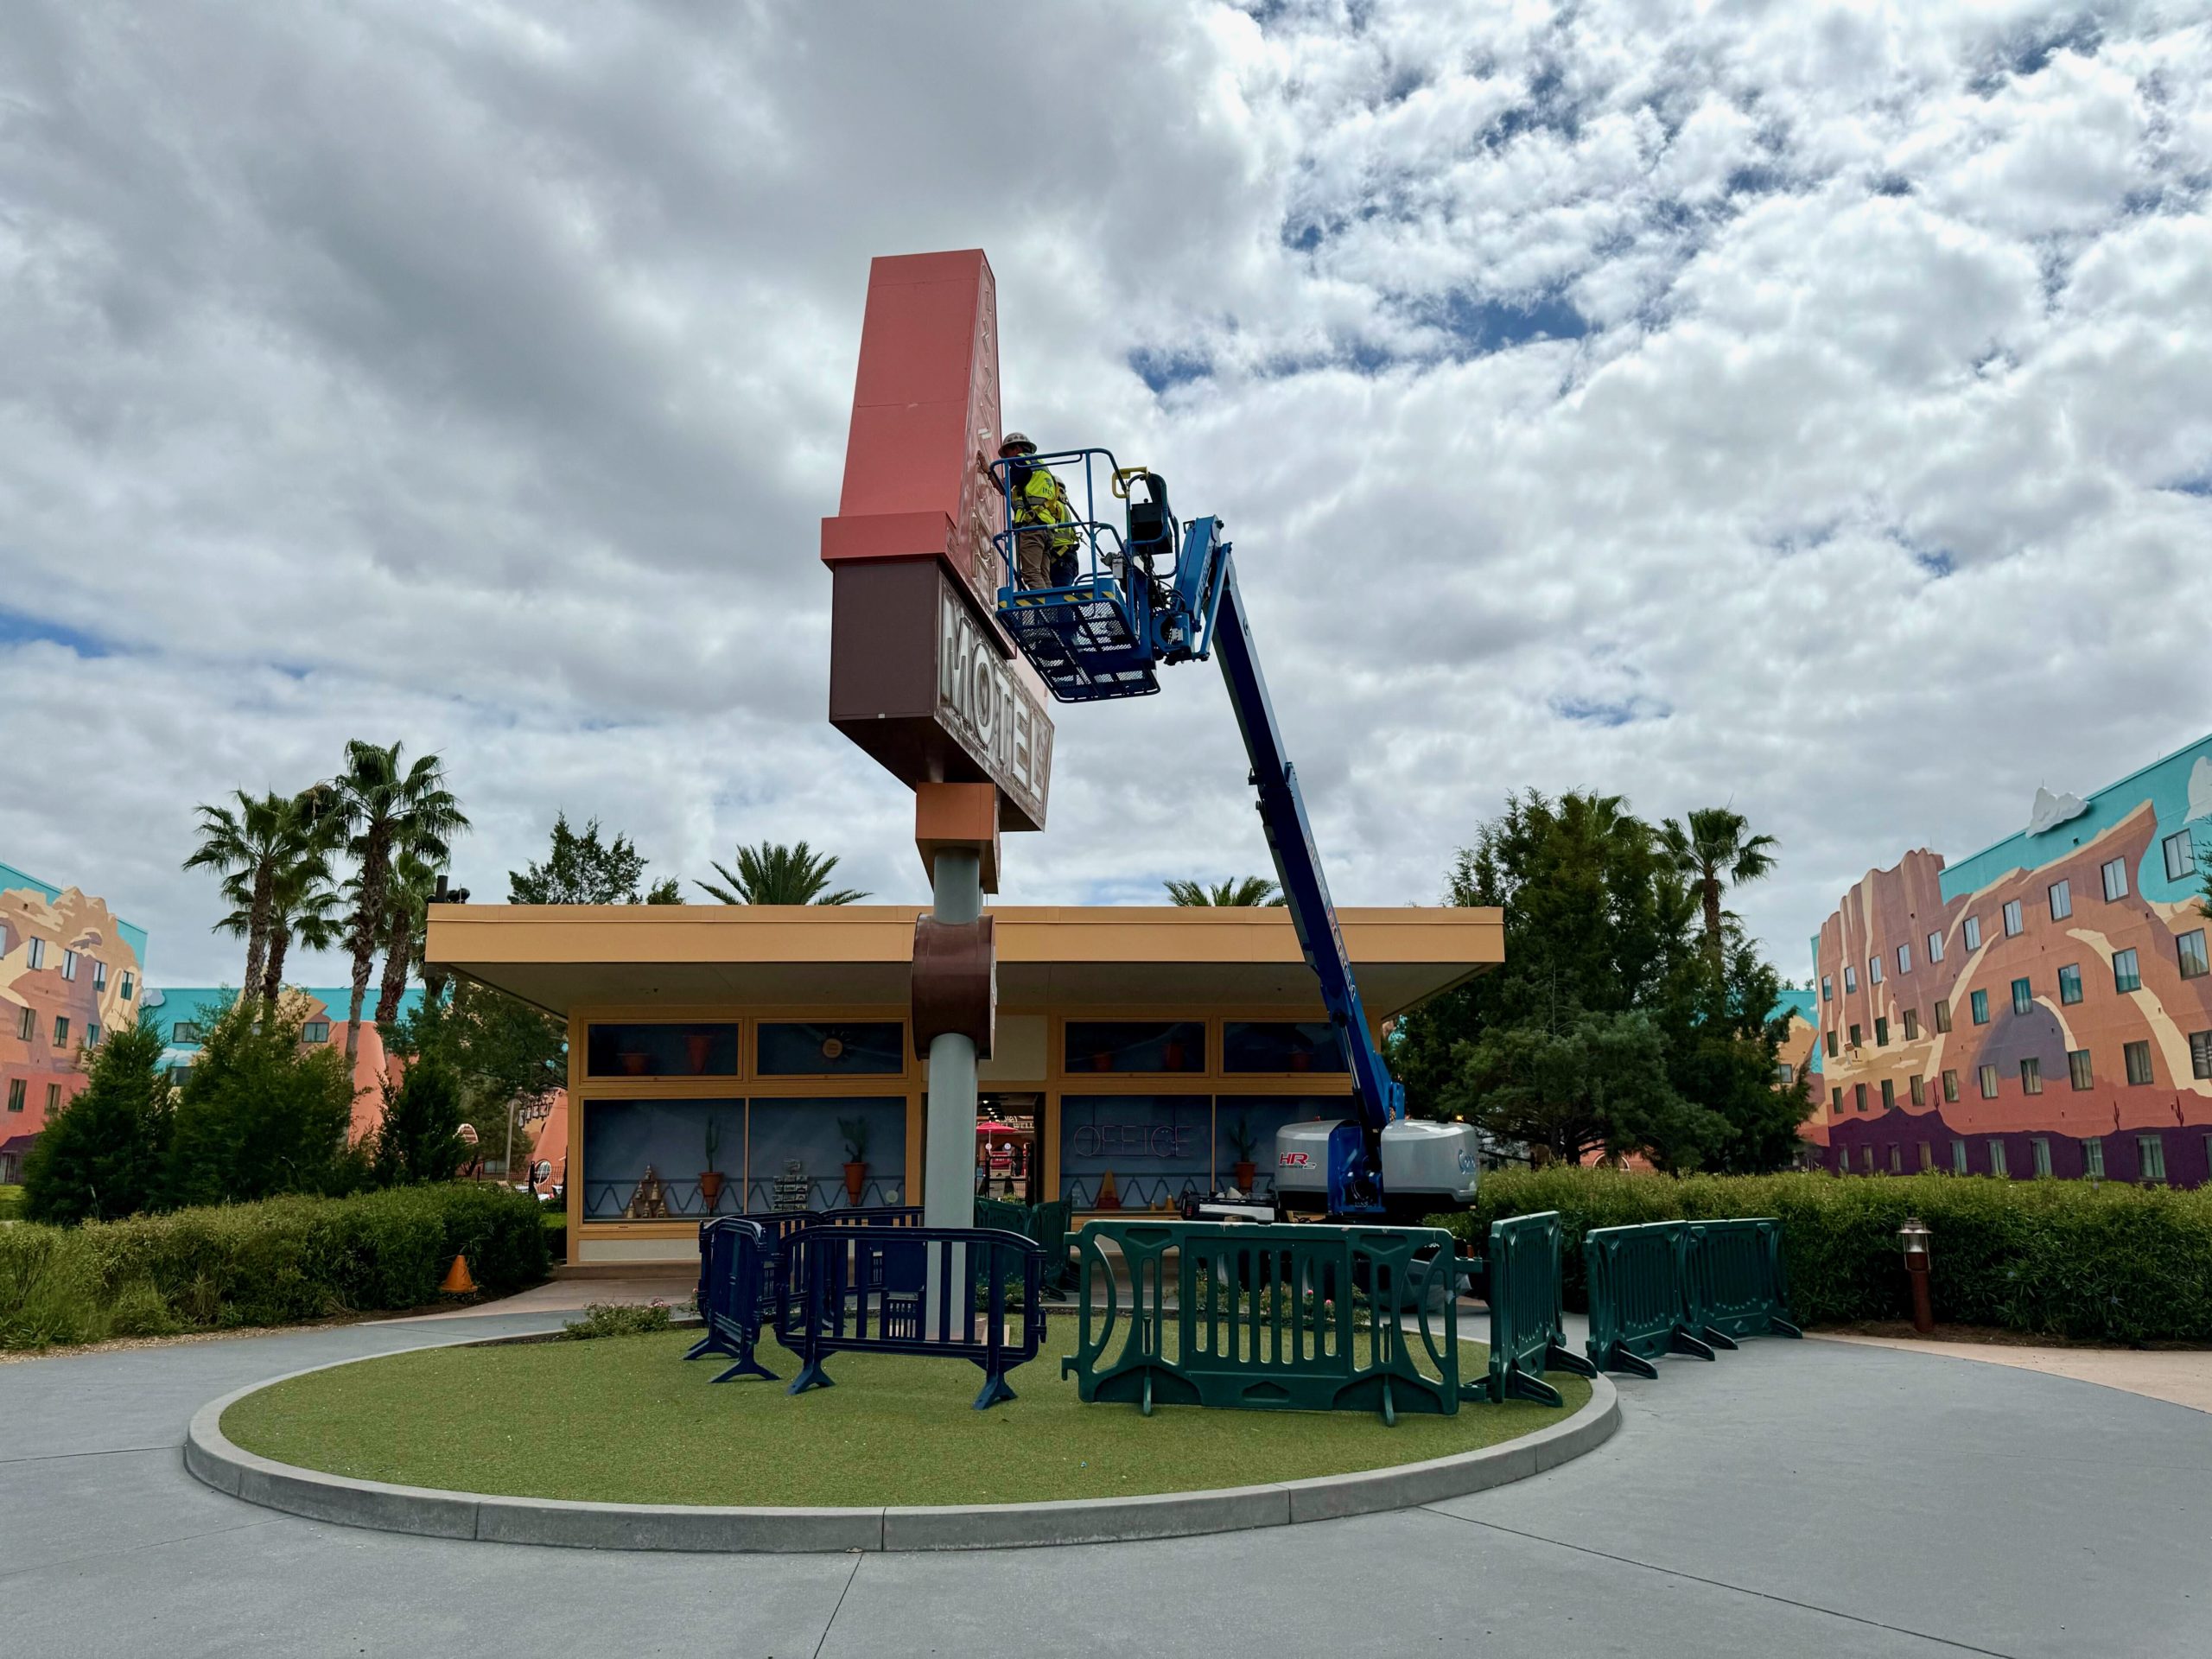 Cozy Cone Motel Refurbishment at Disney's Art of Animation Resort